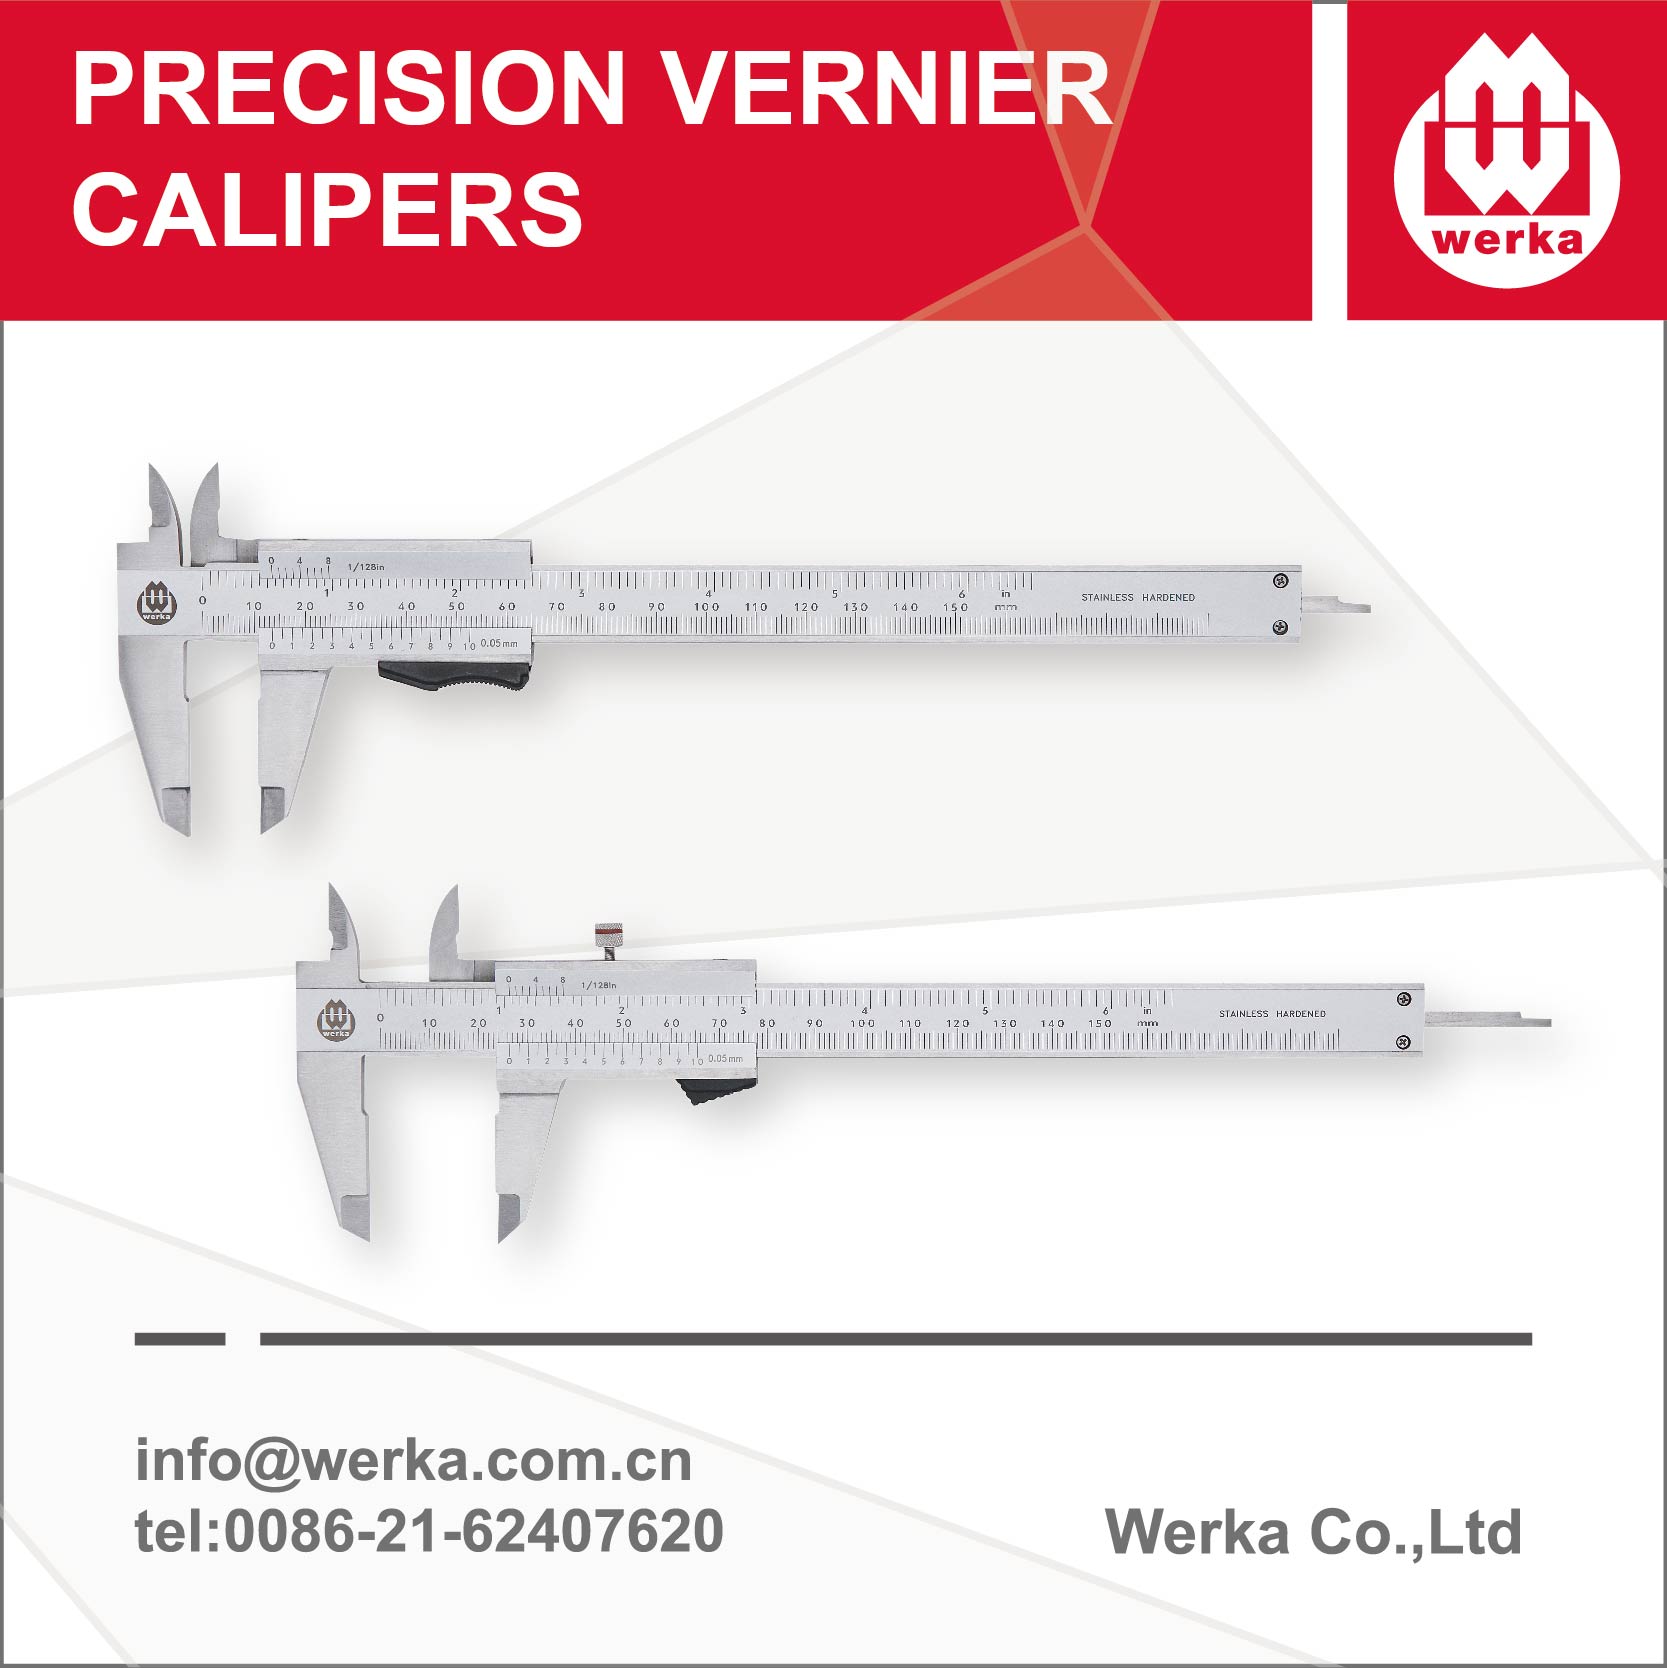 Precision venier calipers